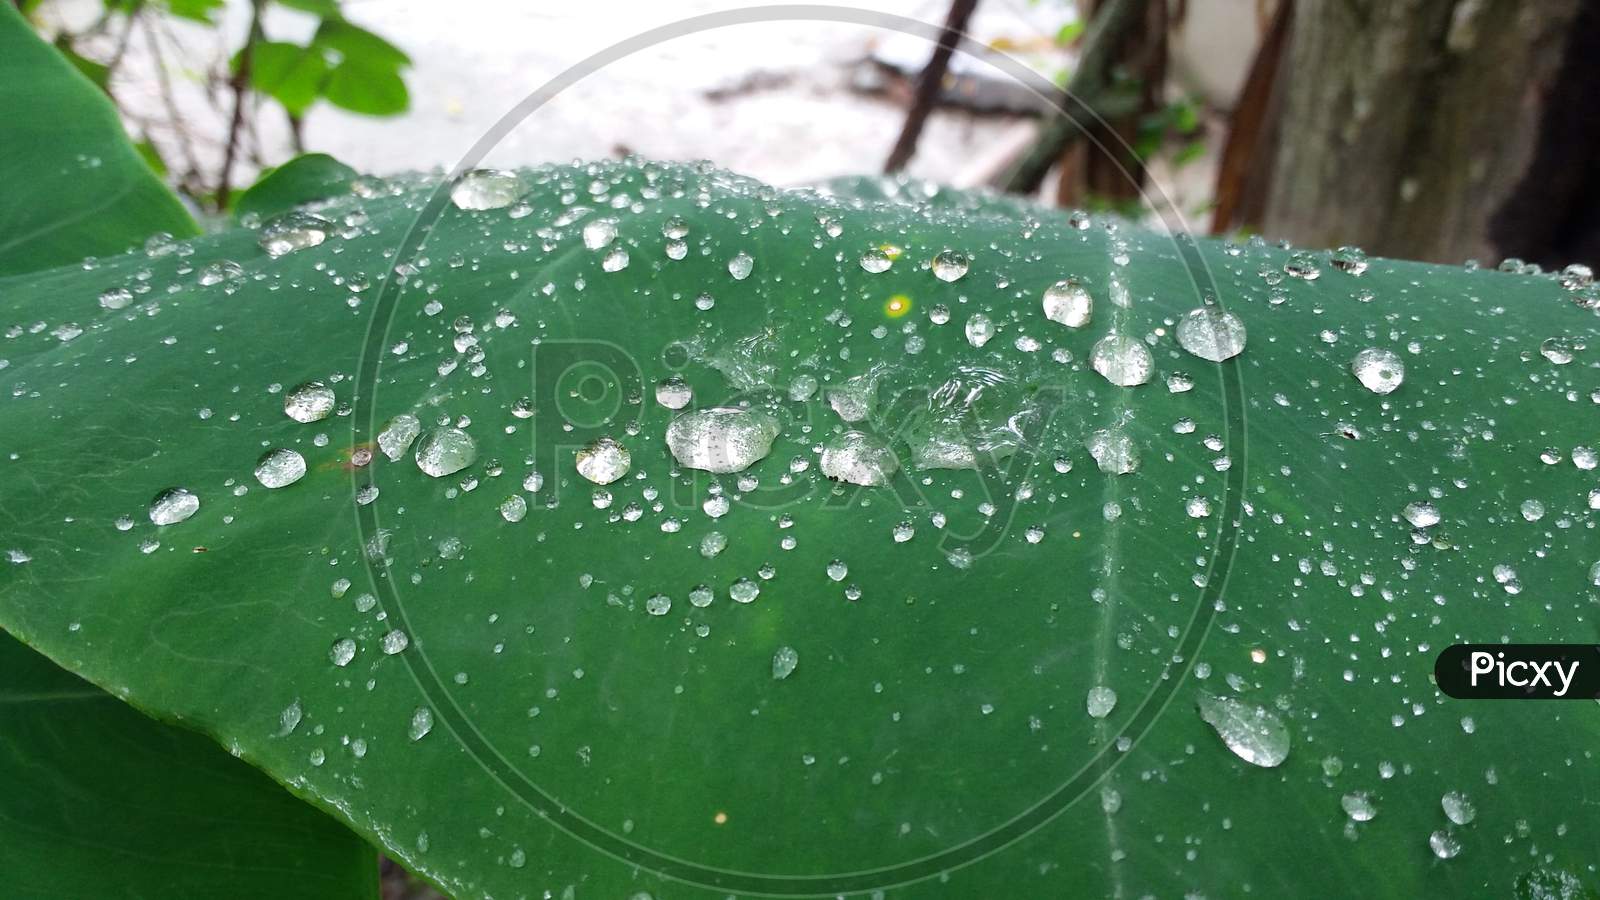 Green Leaf whit raindrops